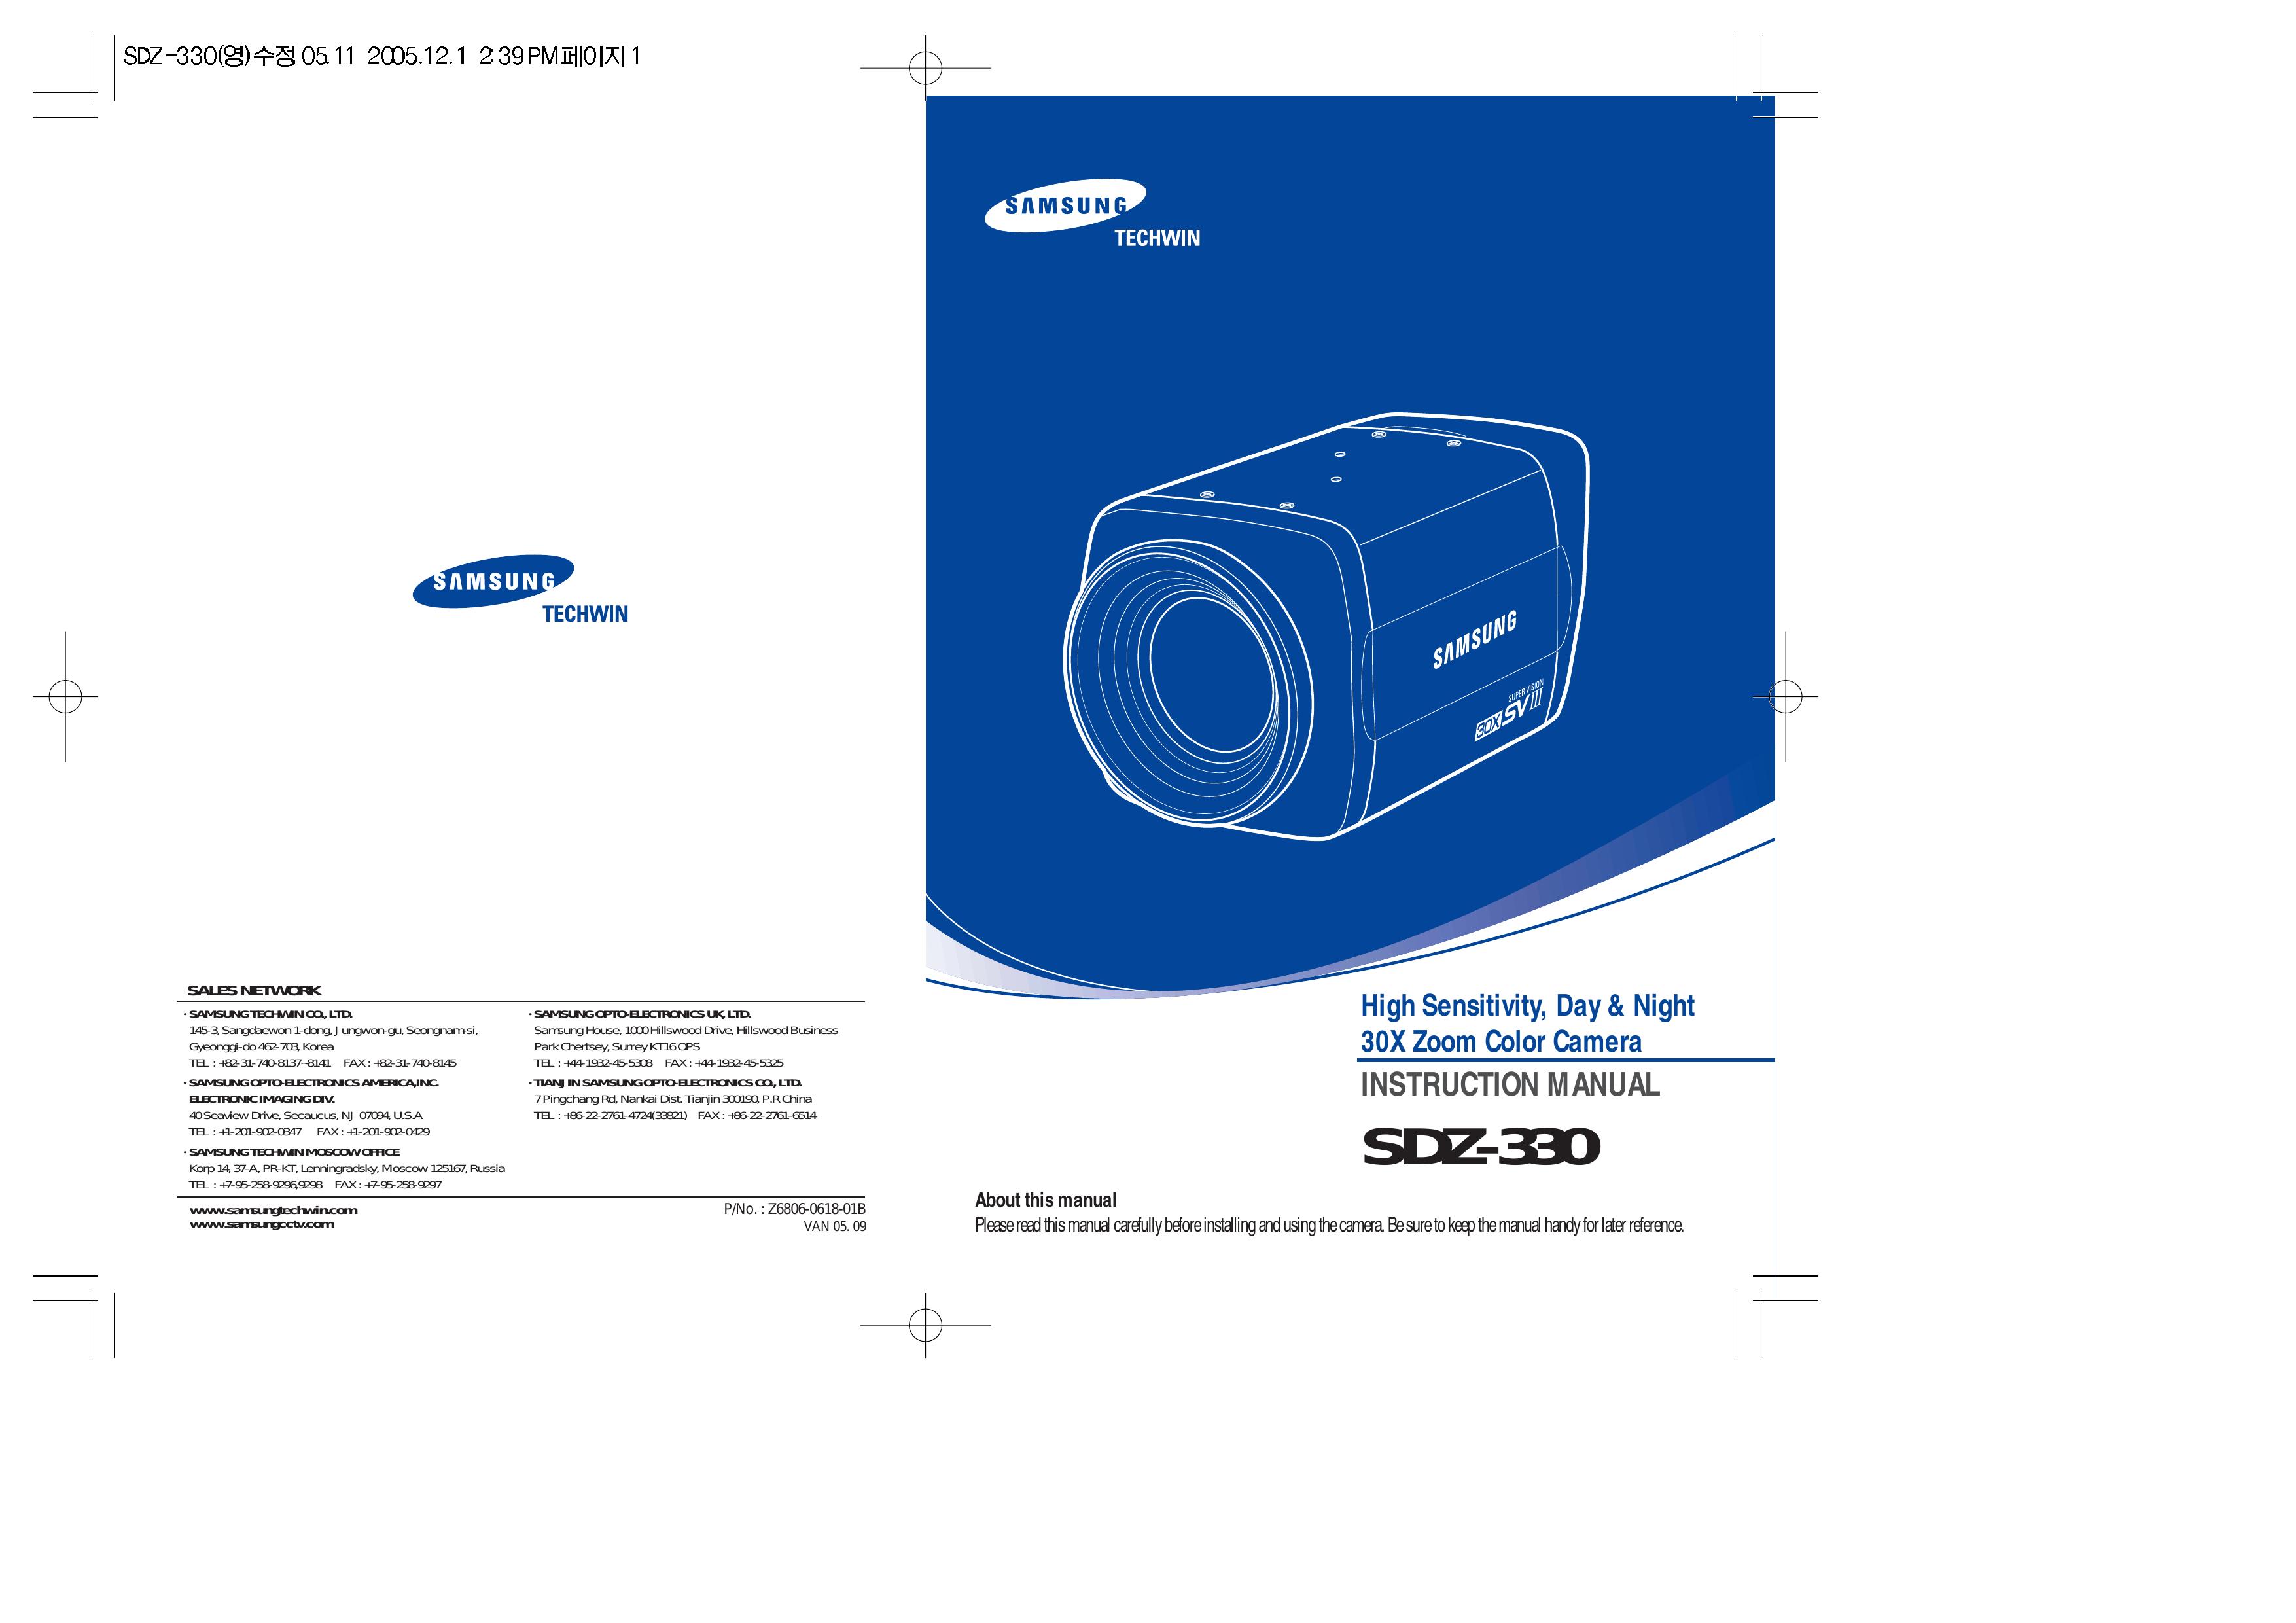 Silex technology SDZ-330 Digital Camera User Manual